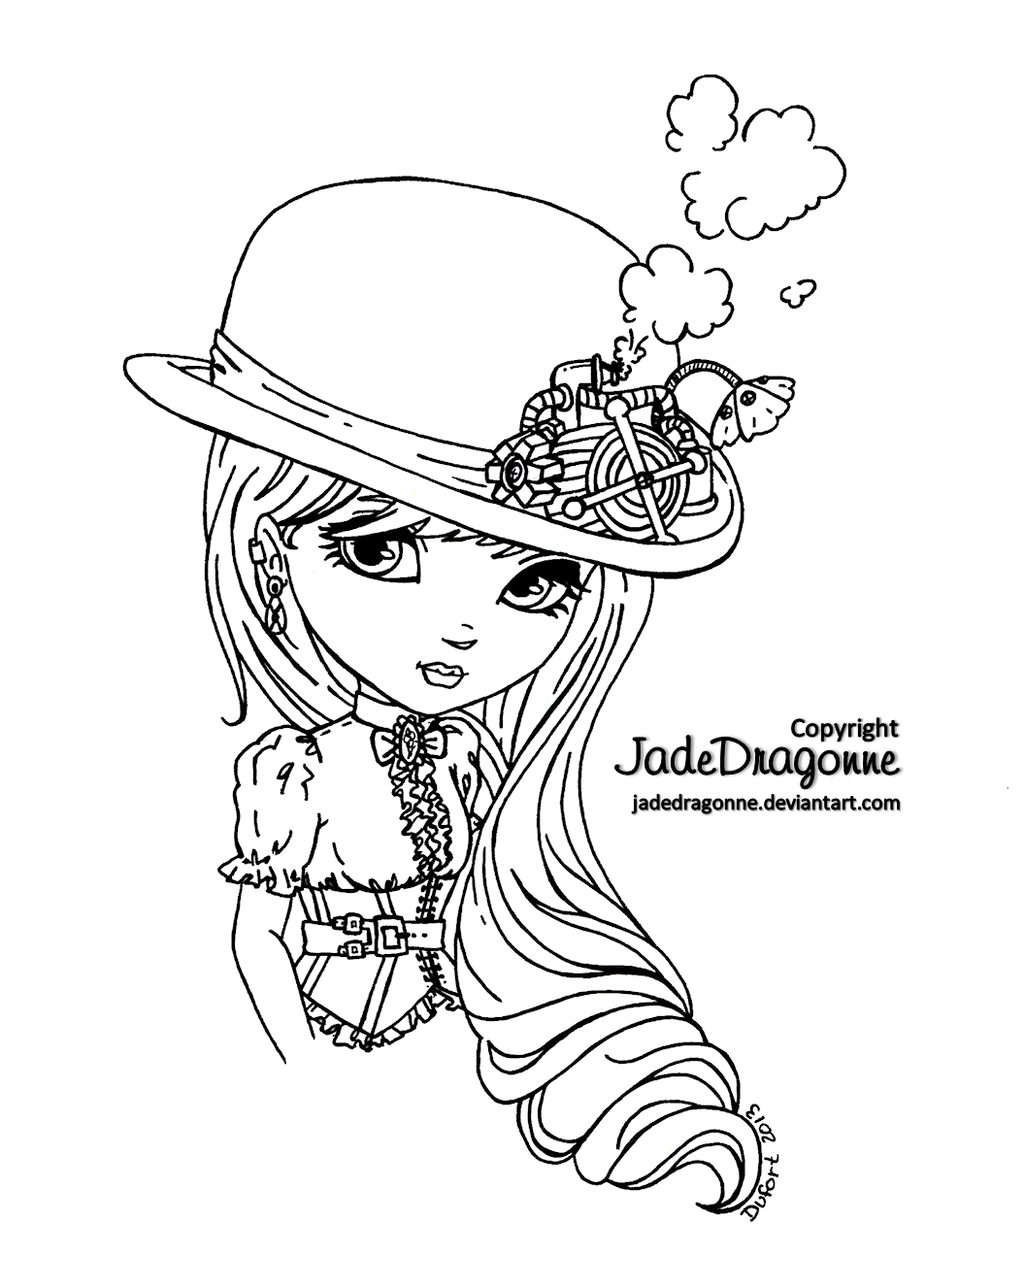 jadedragonne deviantart coloring pages - photo #30